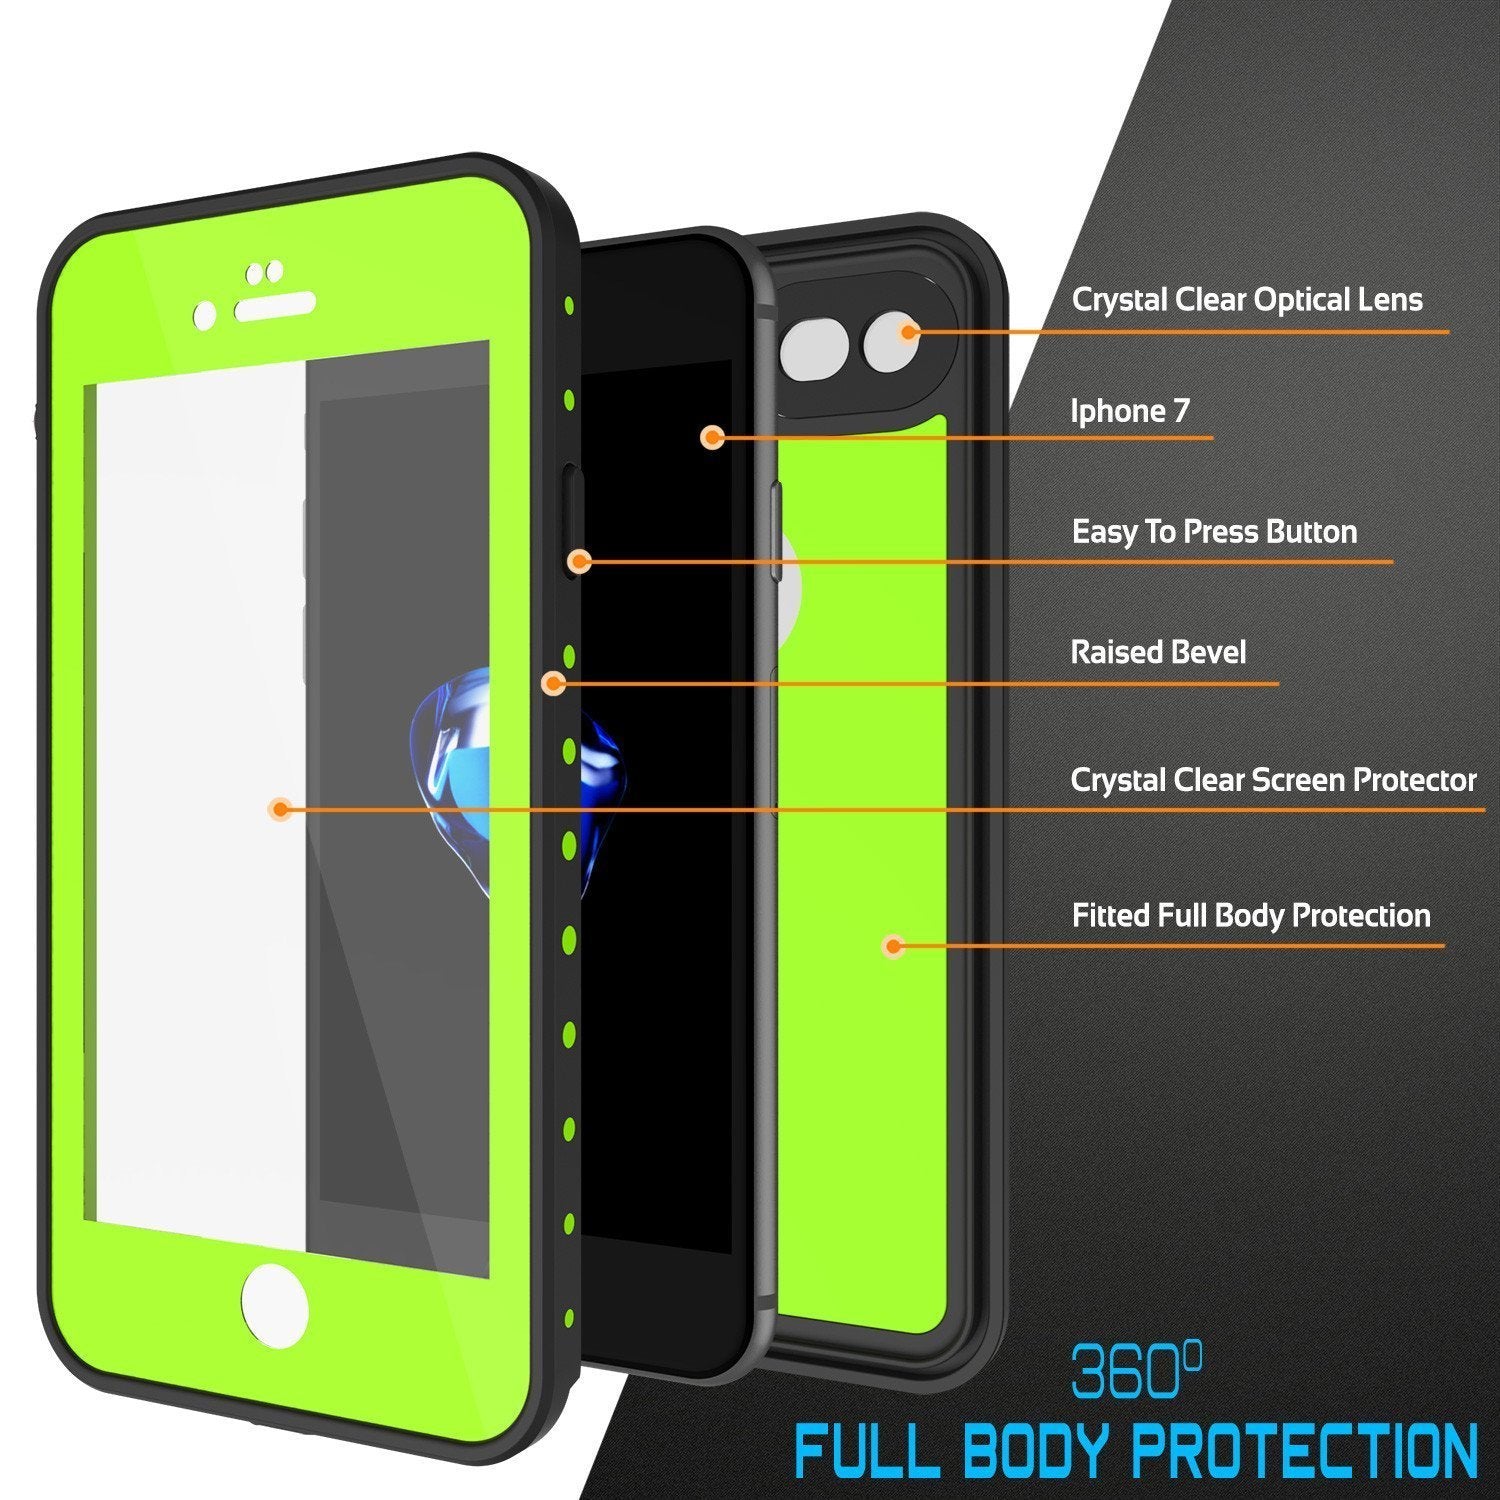 iPhone 8 Waterproof Case, Punkcase [Light Green] [StudStar Series] [Slim Fit][IP68 Certified]  [Dirt/Snow Proof]